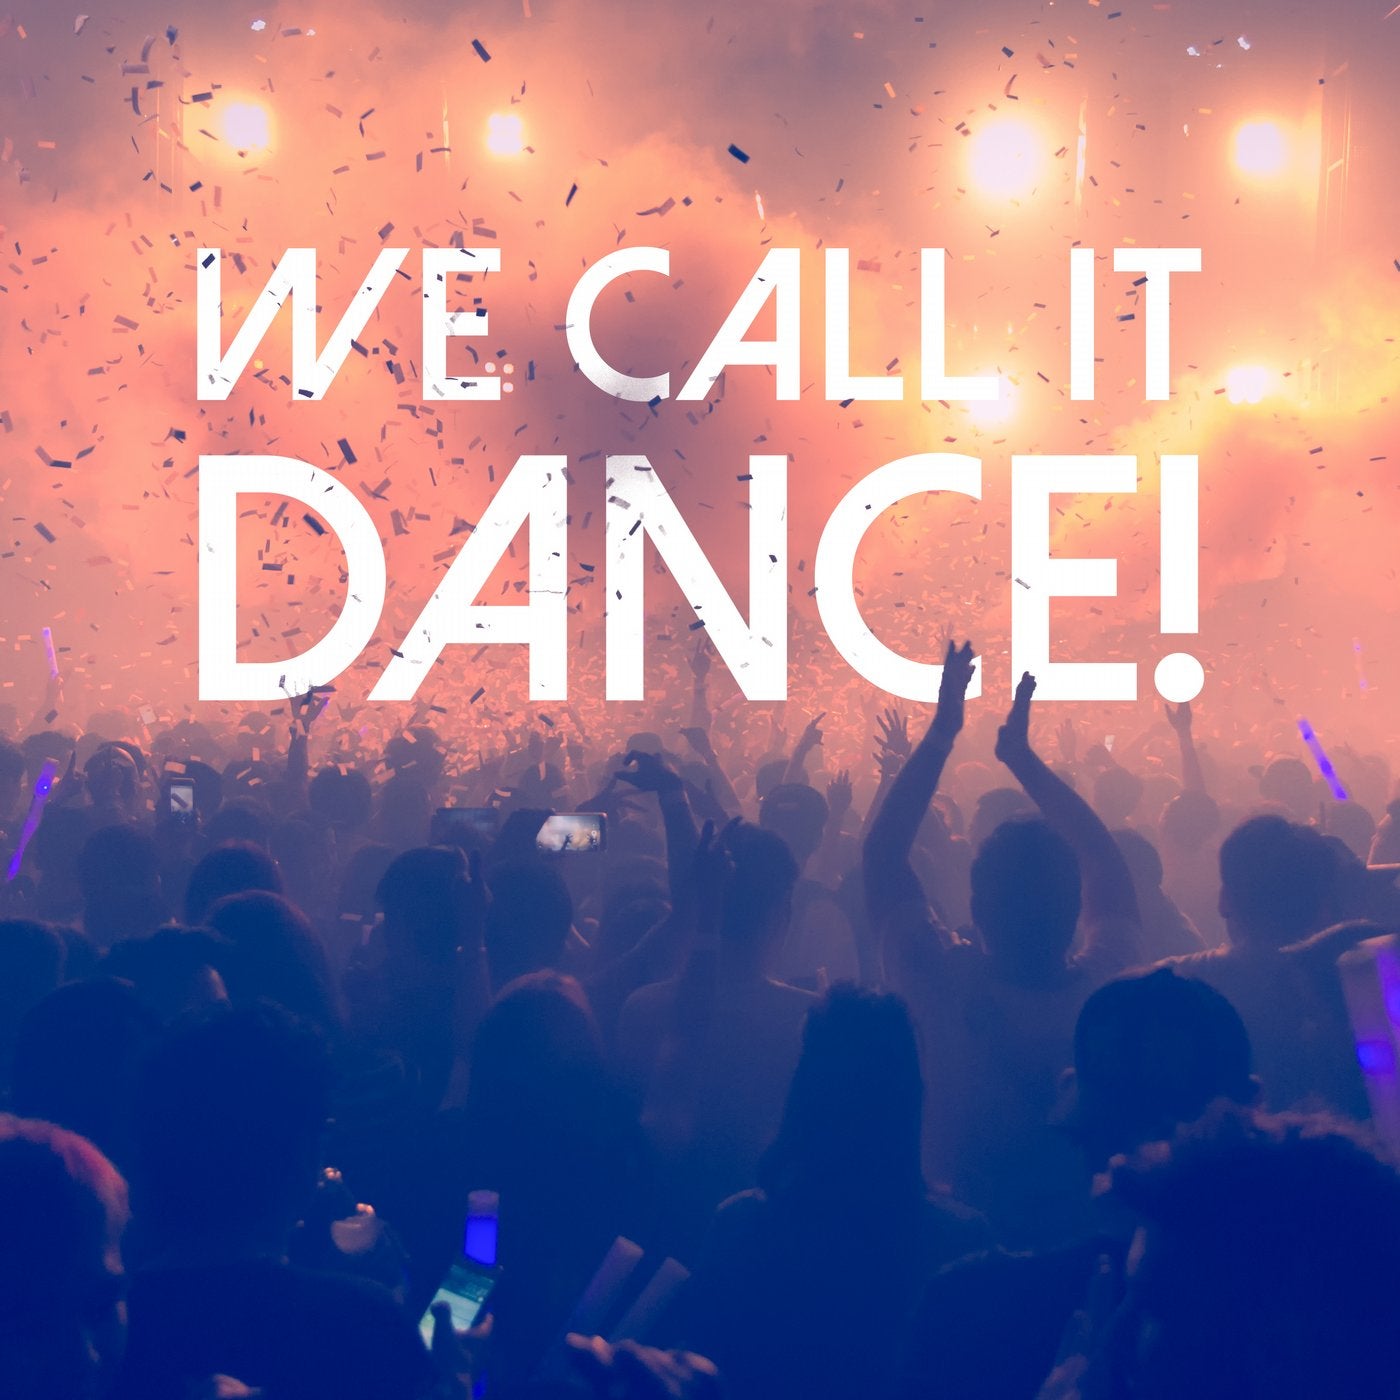 We Call It Dance!